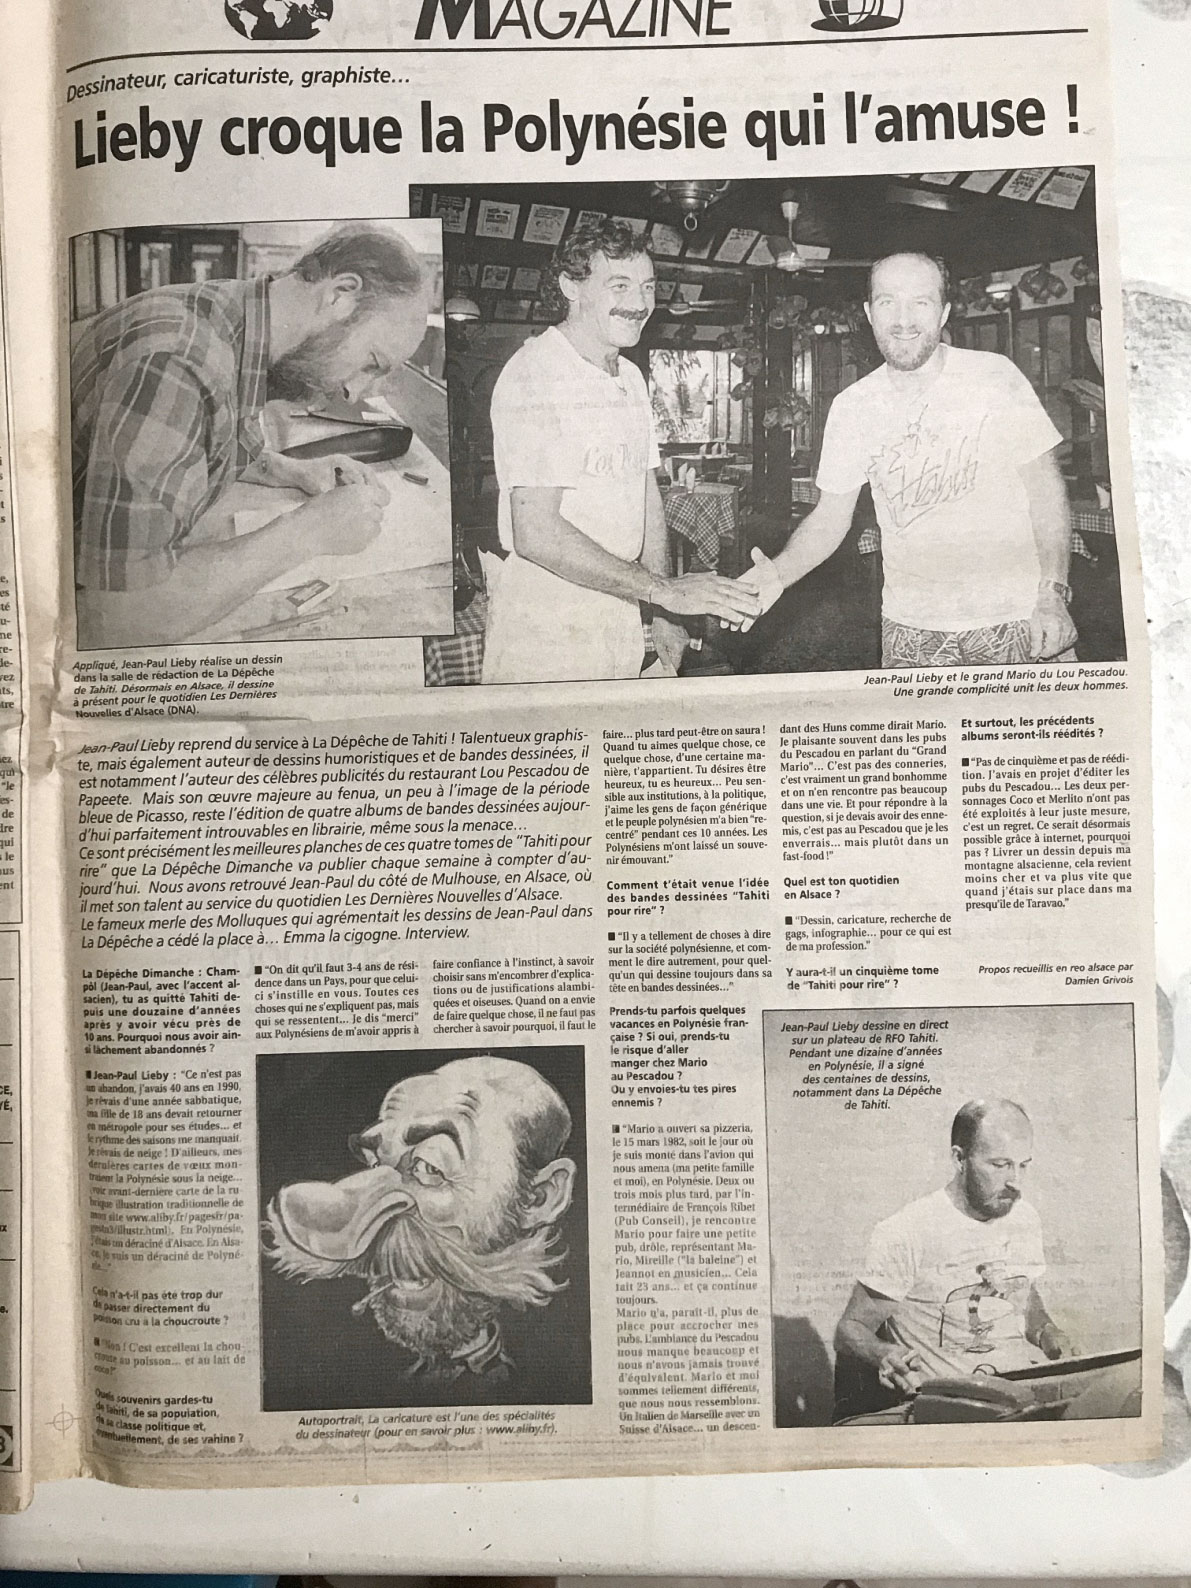 Article, Champol 10 ans en Polynésie, page 1